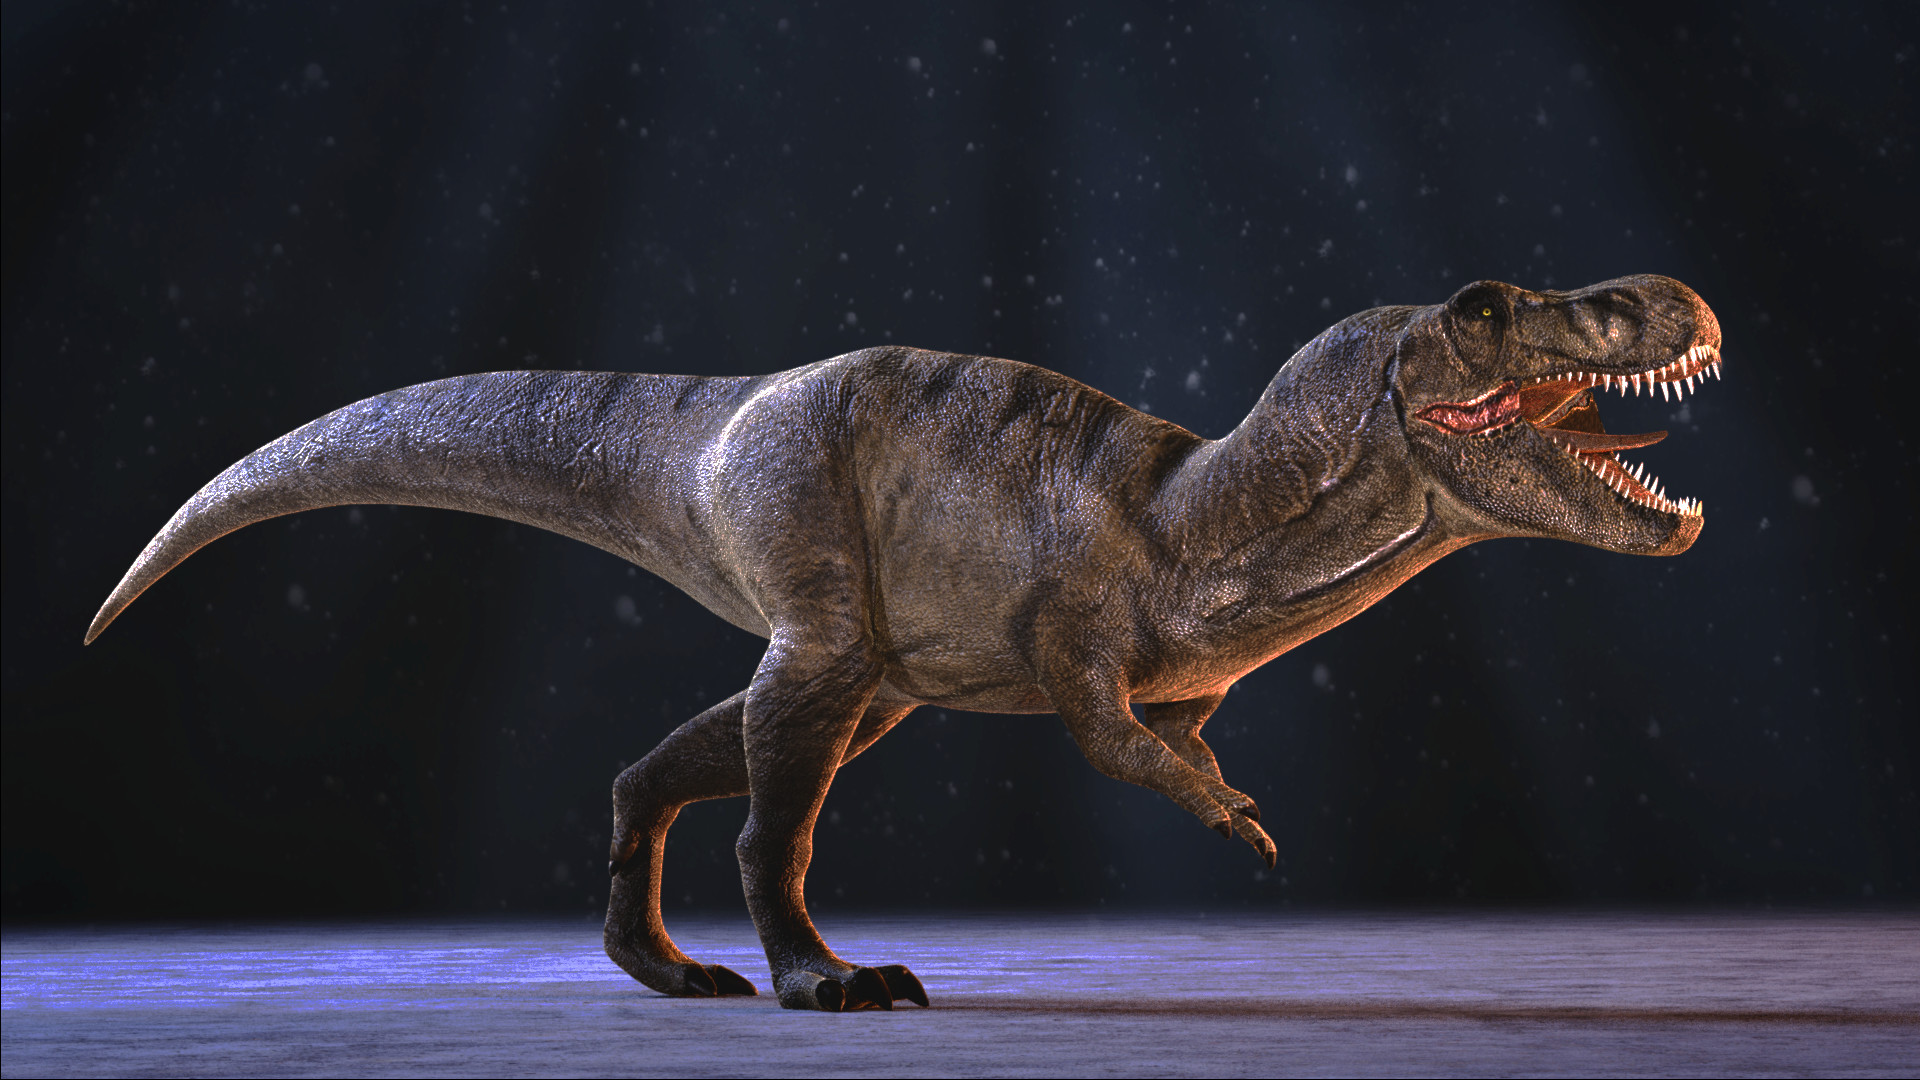 Jurassic park's T.rex.